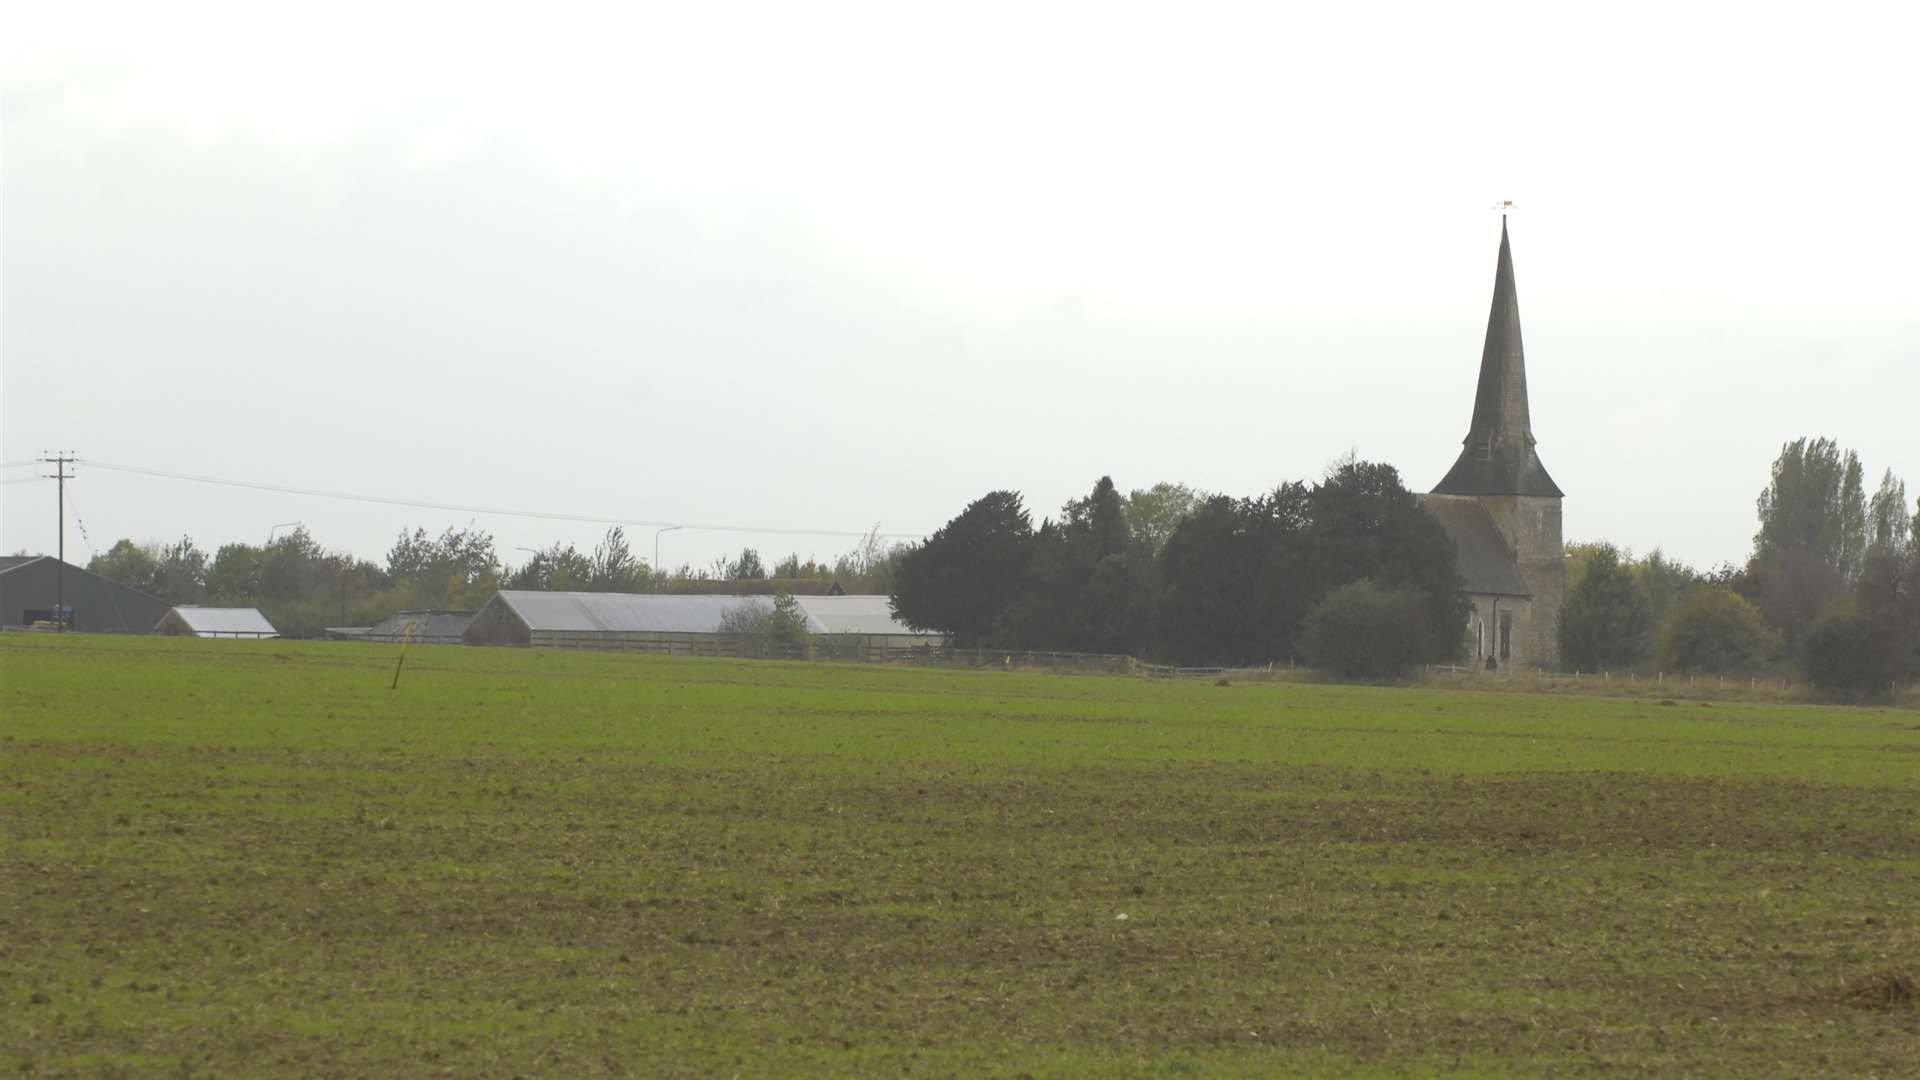 The grade-I listed St Mary's Church in Sevington